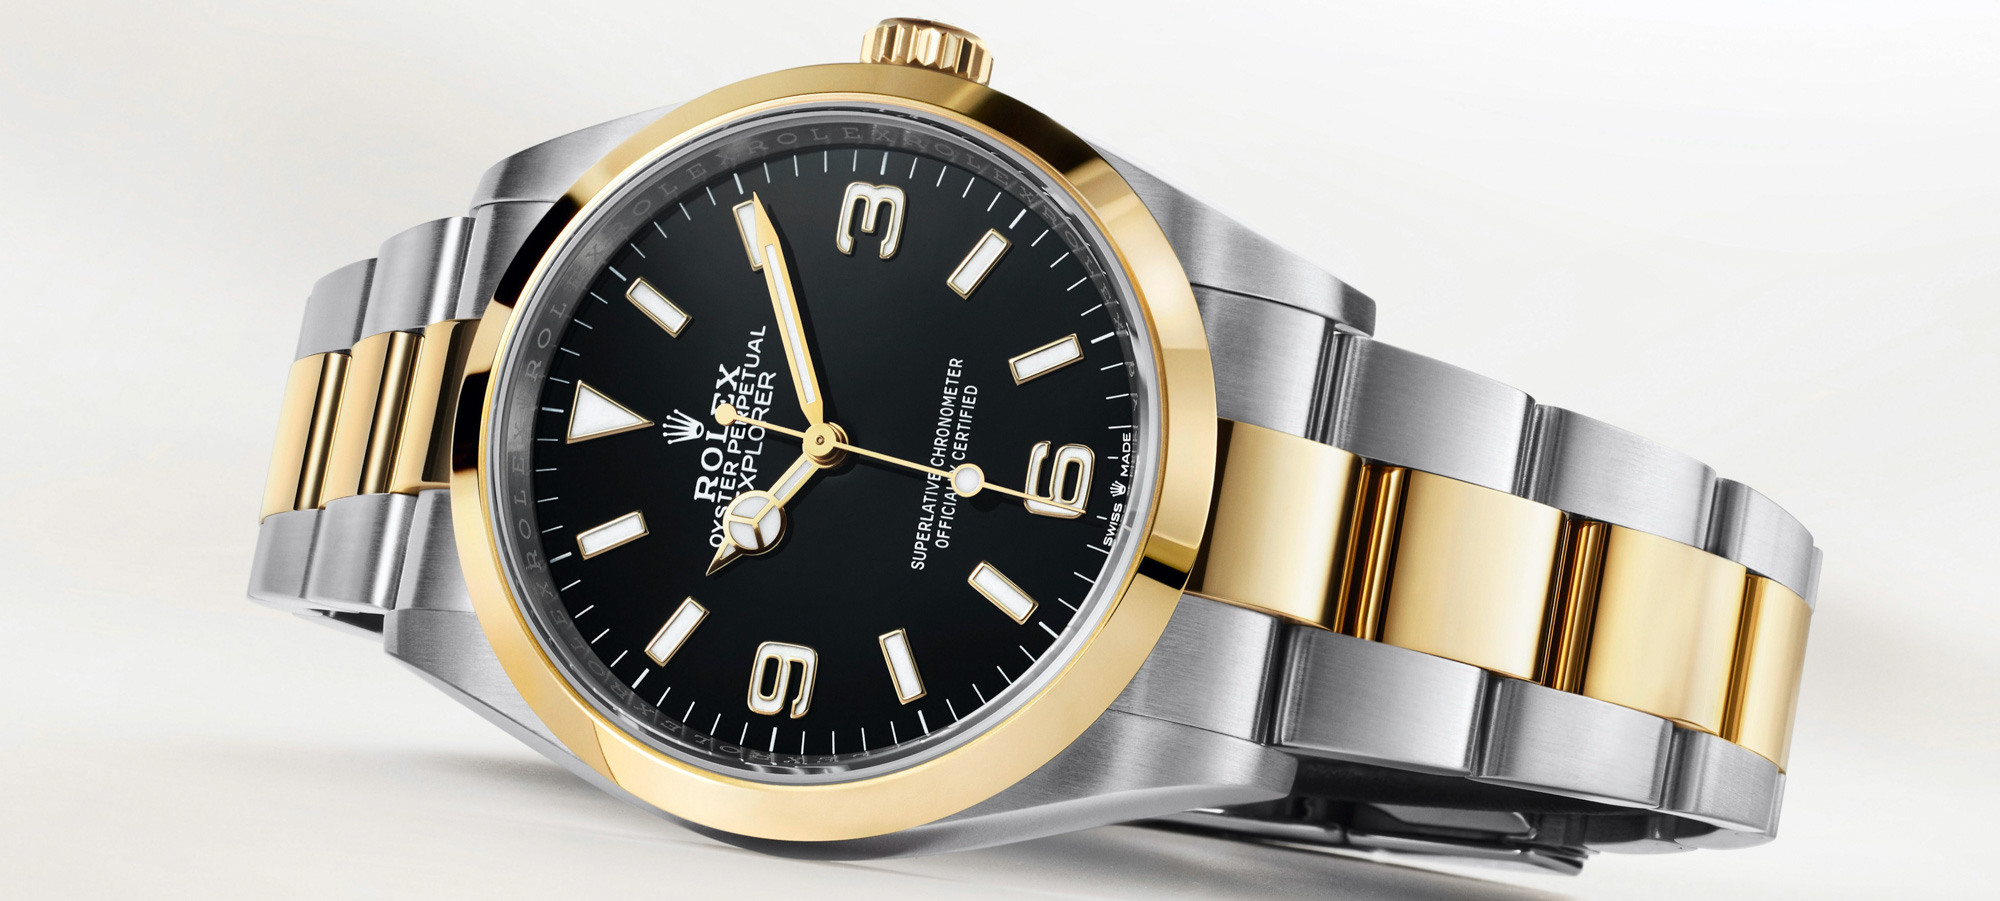 Rolex Explorer 36 Watch Returns To Its Original Size, Gets New Generation Movement